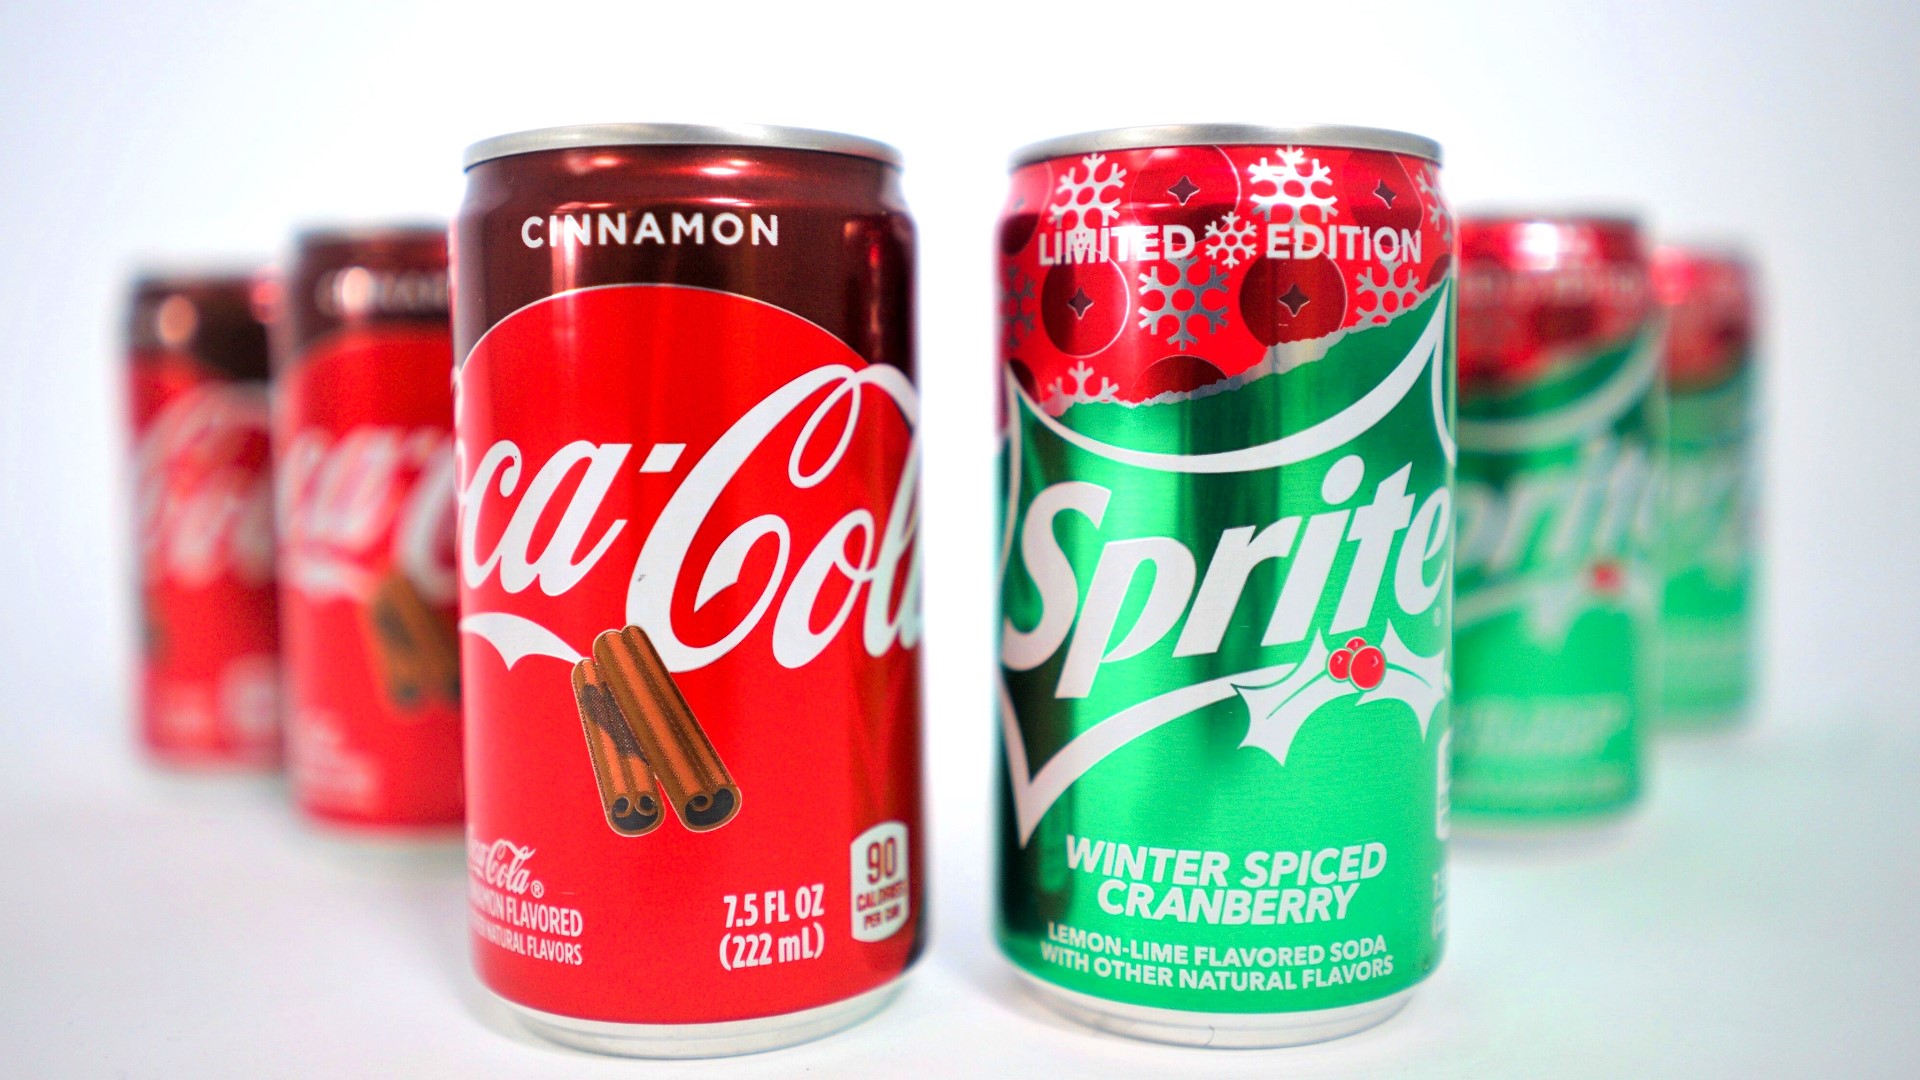 13WMAZ tried Coca-Cola’s new holiday flavors – Coca-Cola Cinnamon and Sprite Winter Spiced Cranberry.